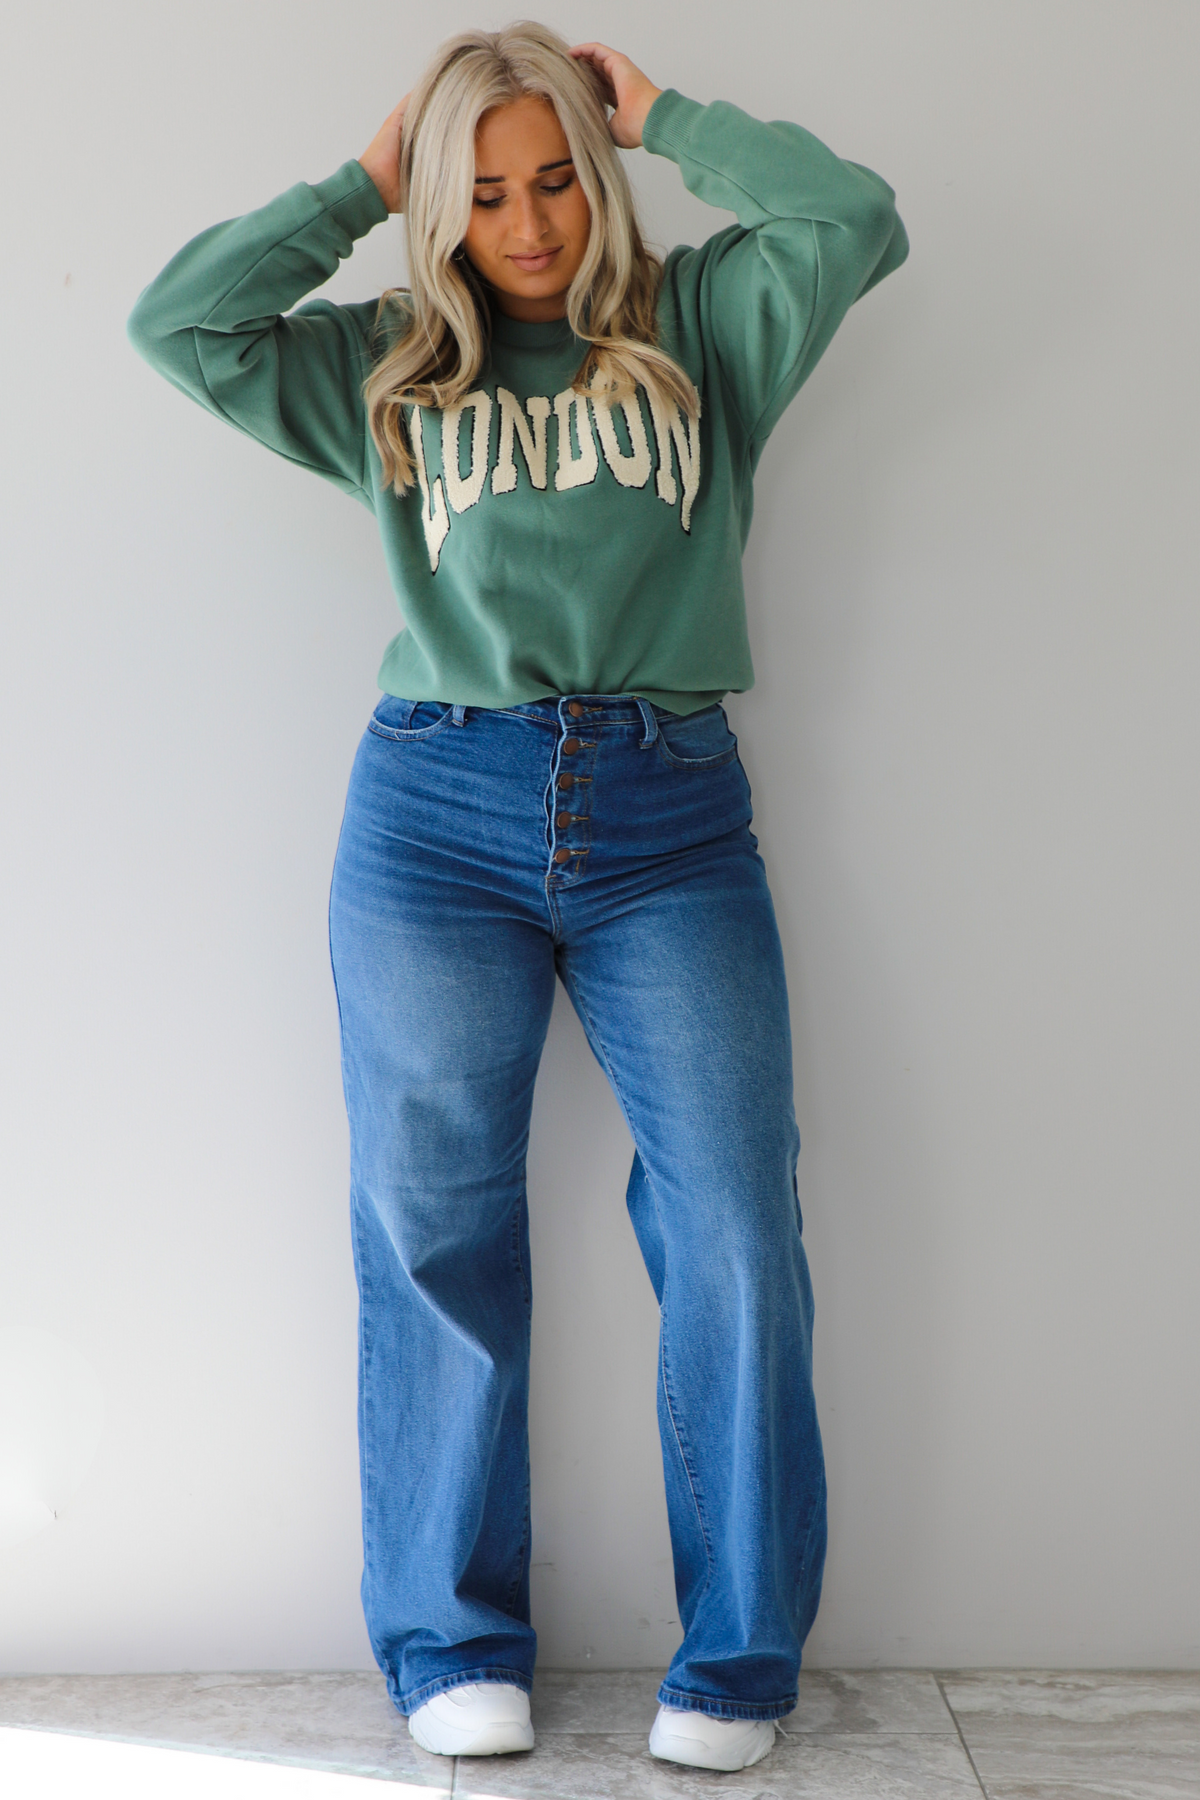 Boulce Letter Patch Sweater: Emerald/Multi